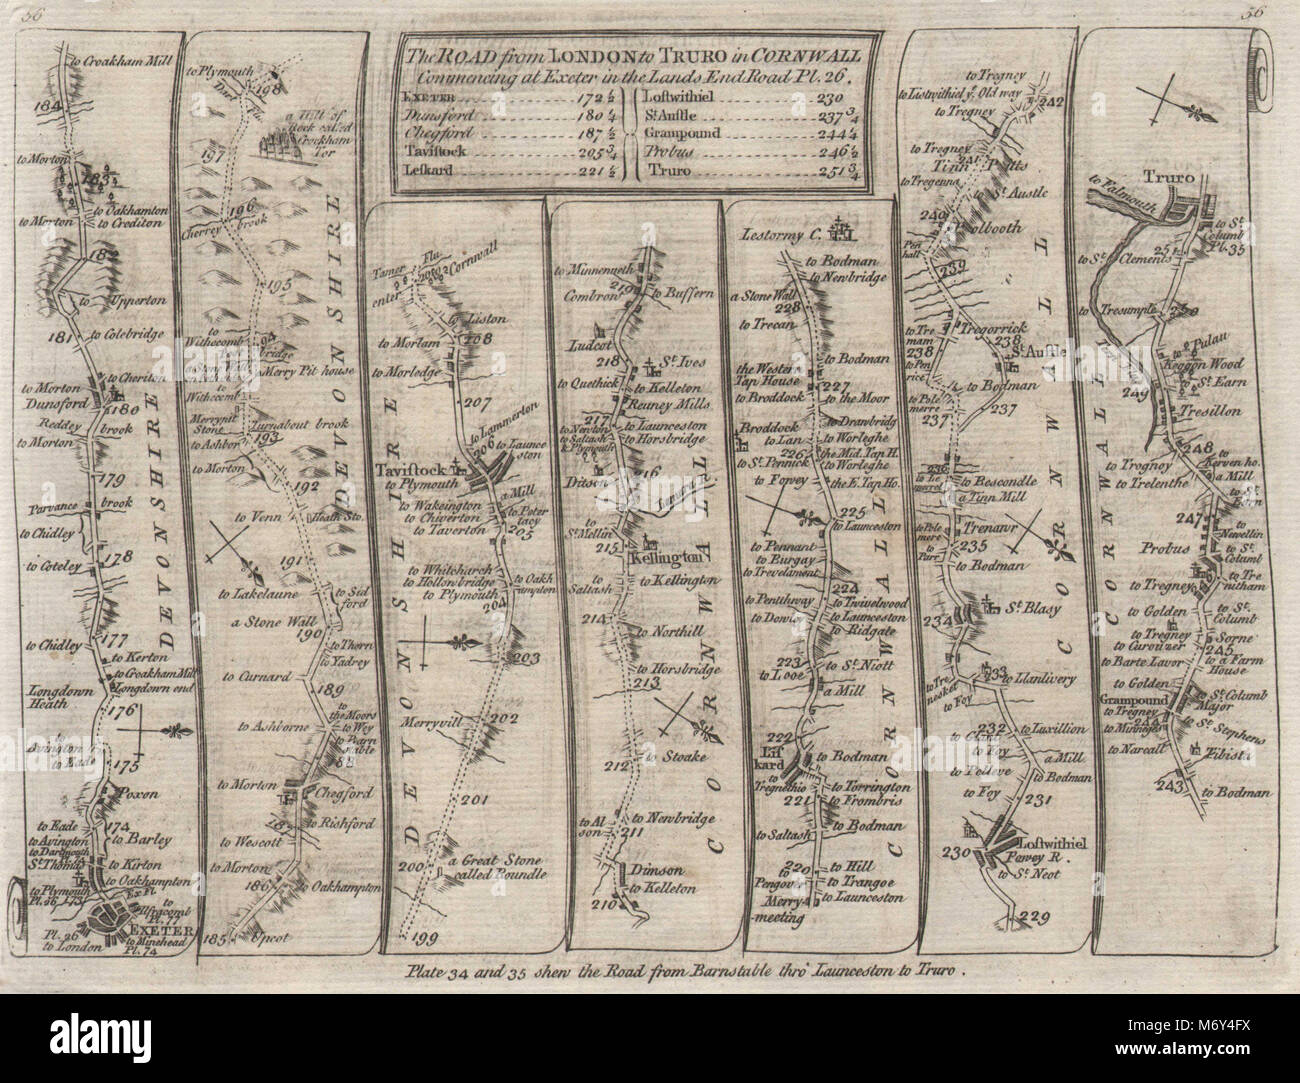 Exeter Chagford Tavistock Liskeard St Austell Truro. KITCHIN road map 1767 Stock Photo